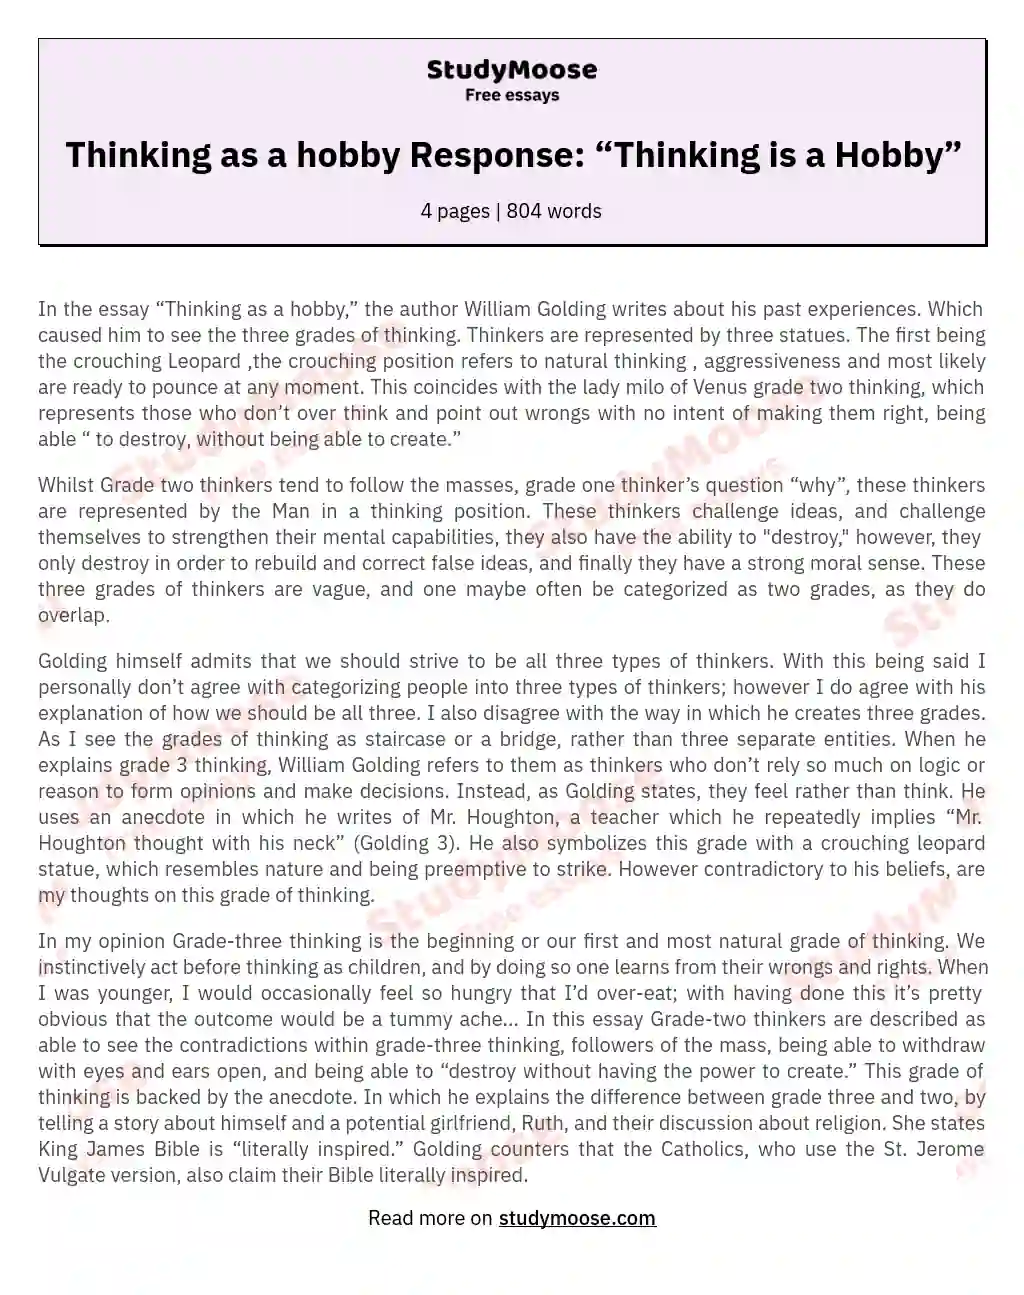 Thinking as a hobby Response: “Thinking is a Hobby” essay